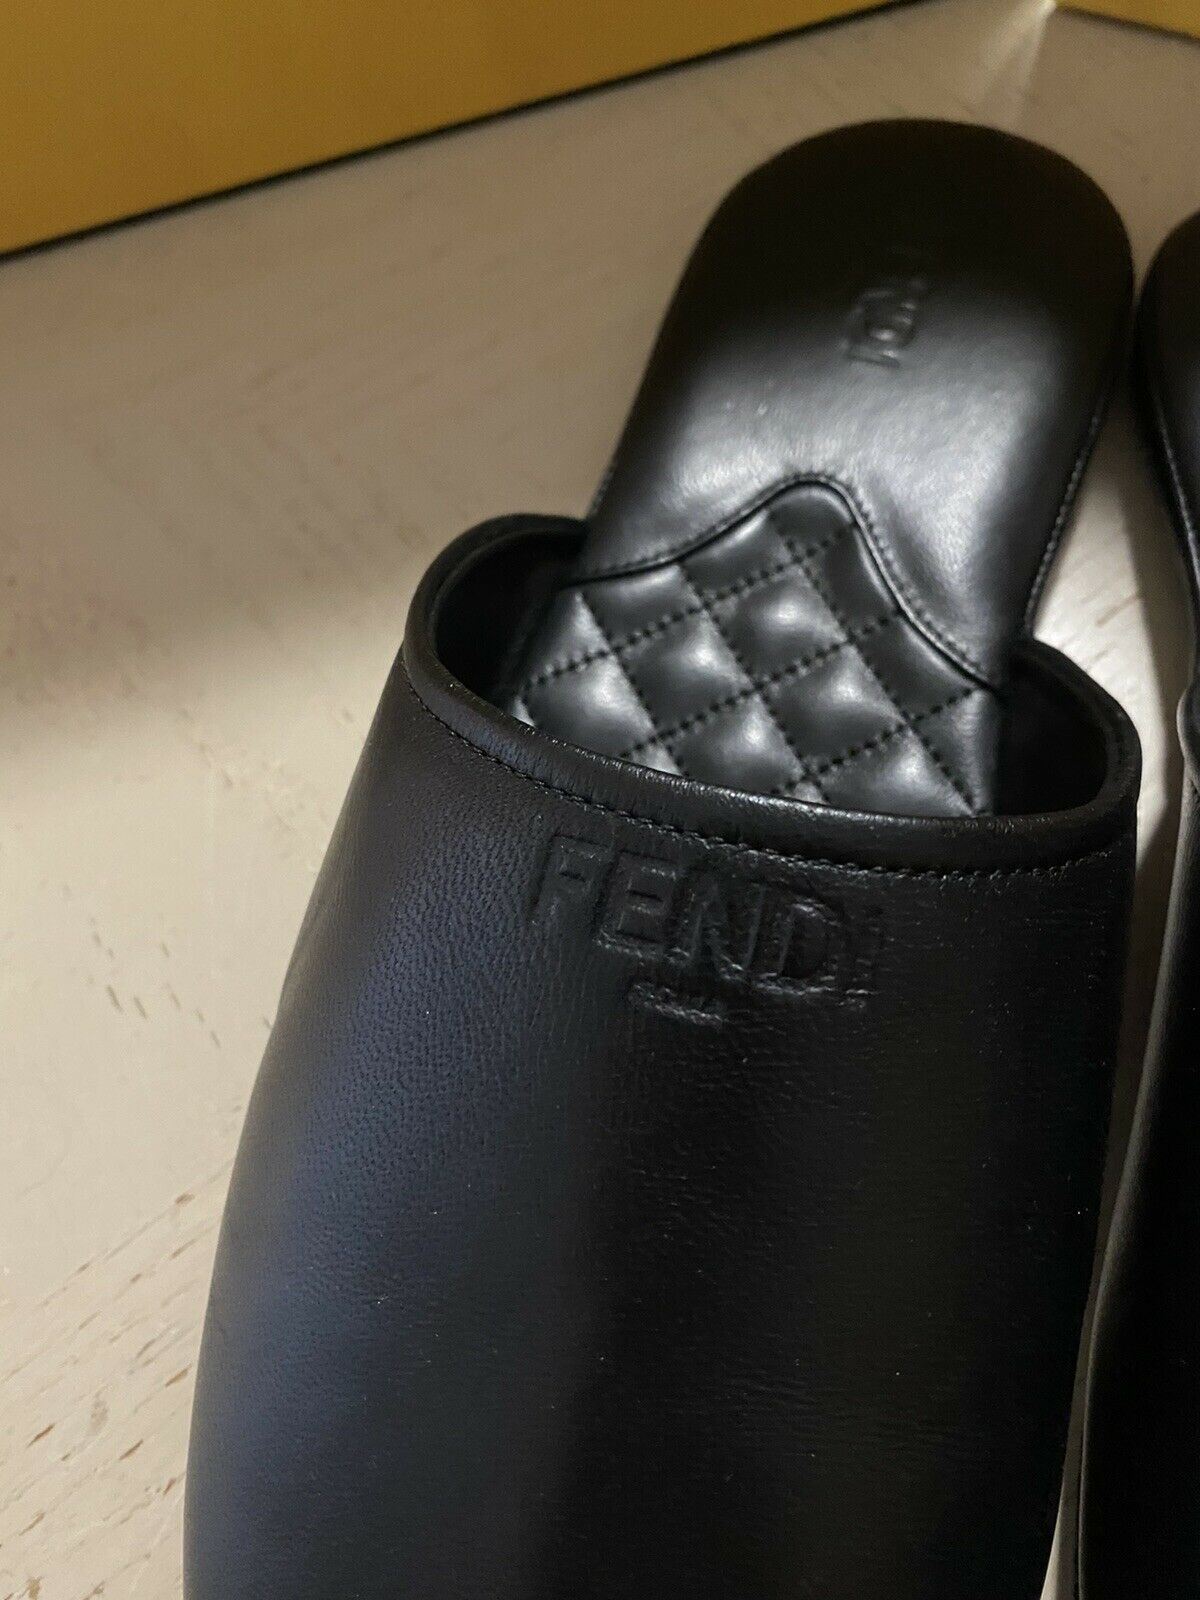 NIB Fendi Mens Leather Sandal Shoes Black 8 US/7 UK Italy